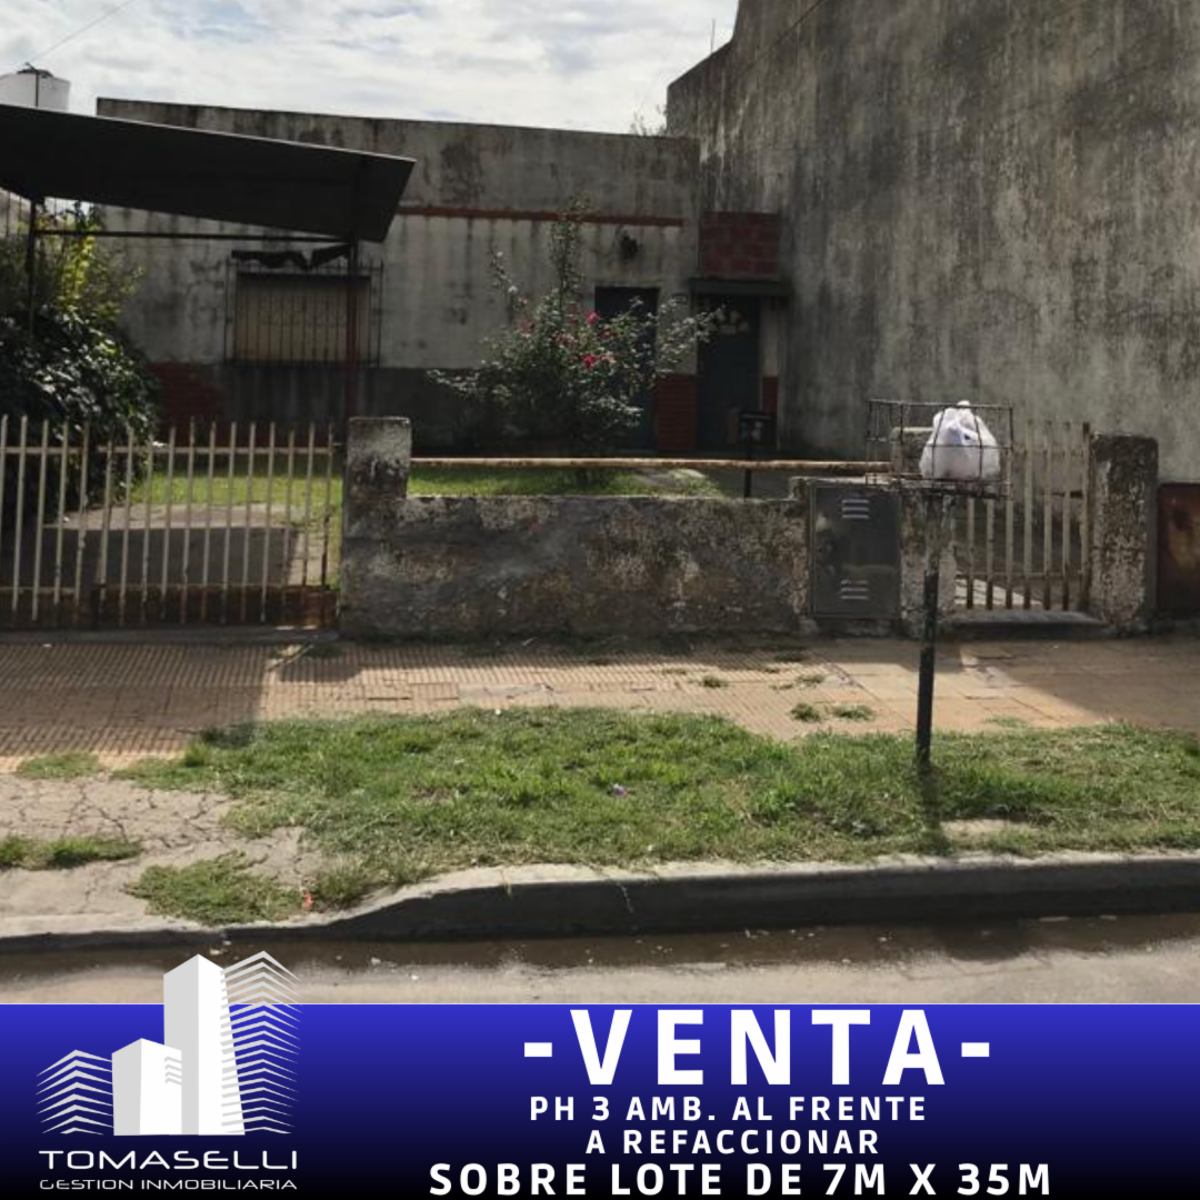 VENTA - VILLA MADERO - CASA AL FRENTE A REFACCIONAR - SOBRE LOTE DE 7.06m x 34.93m